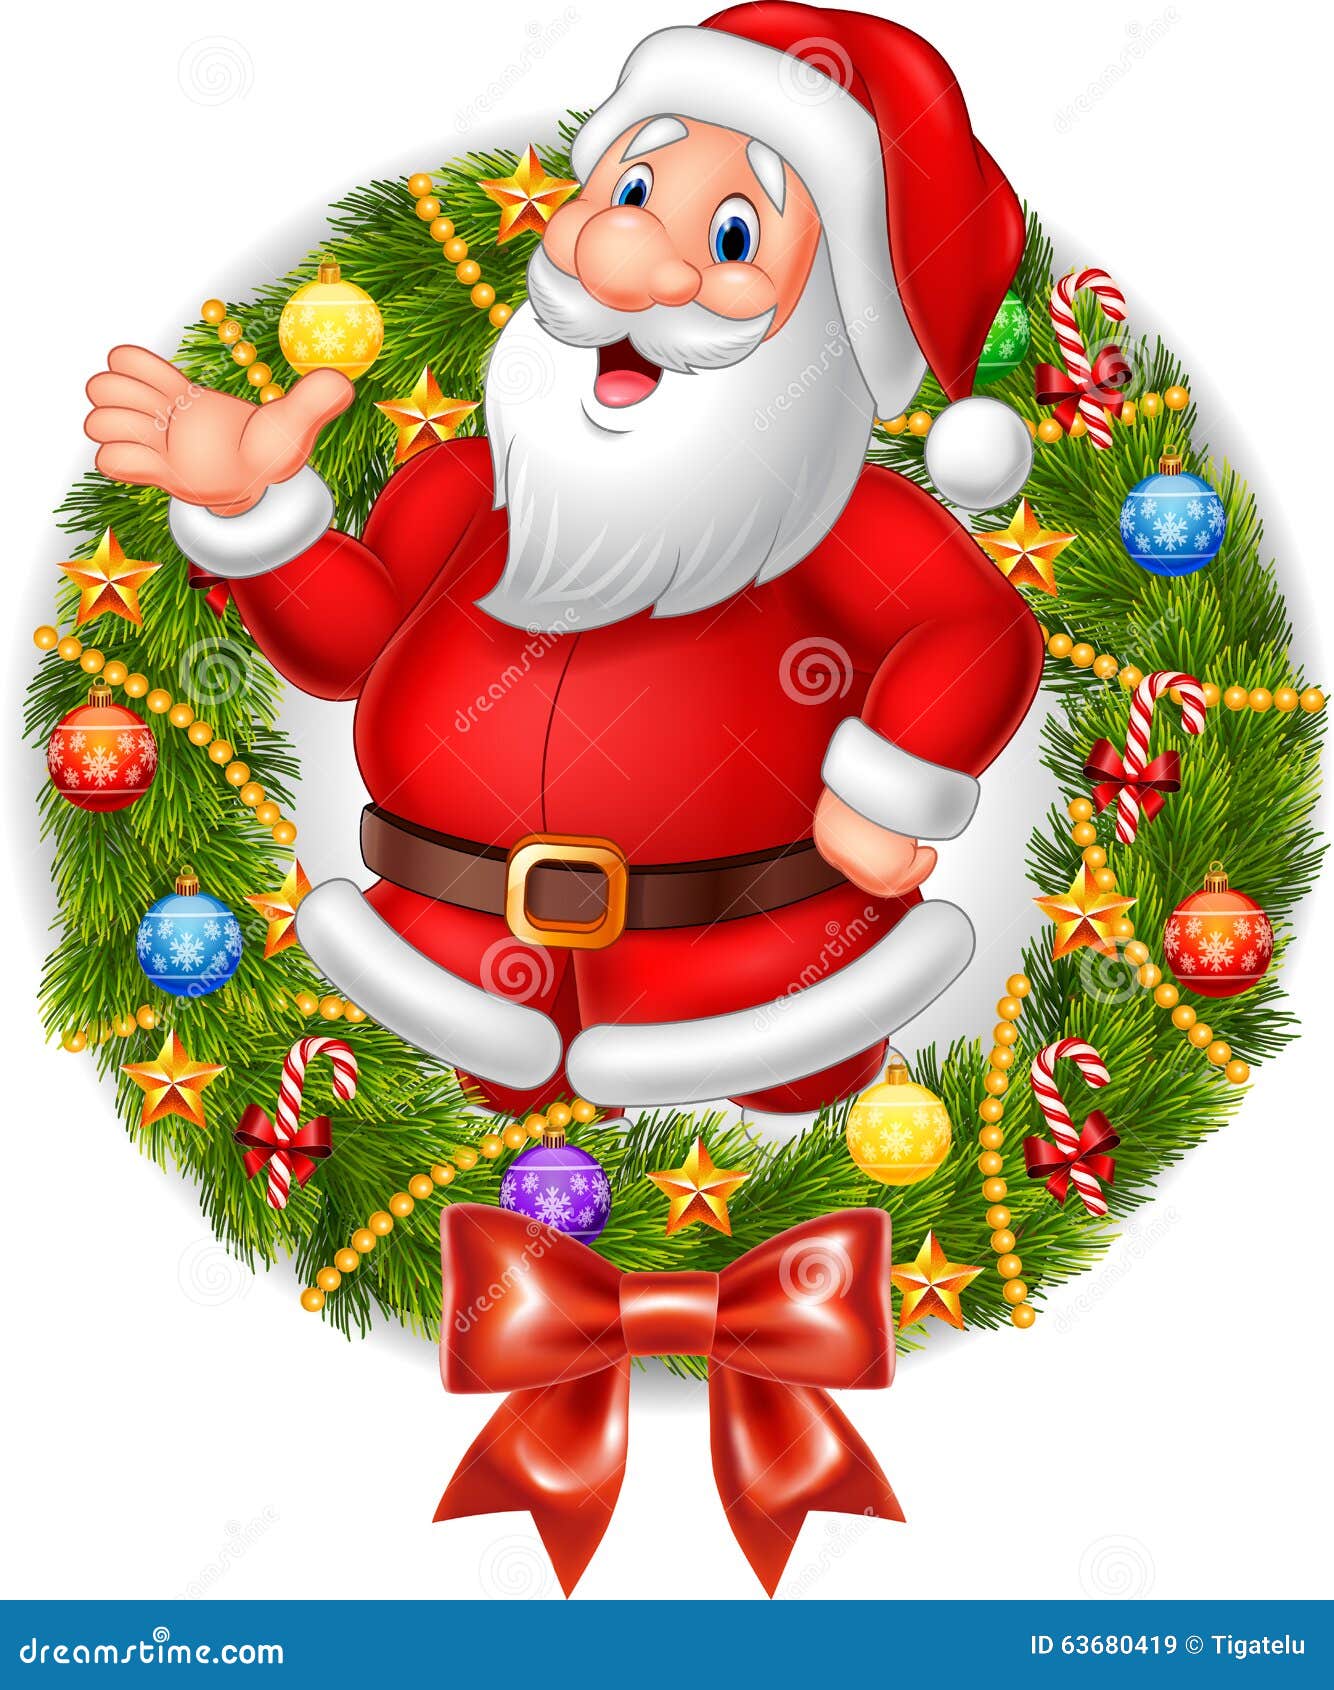 cartoon santa claus waving hand with christmas wreath